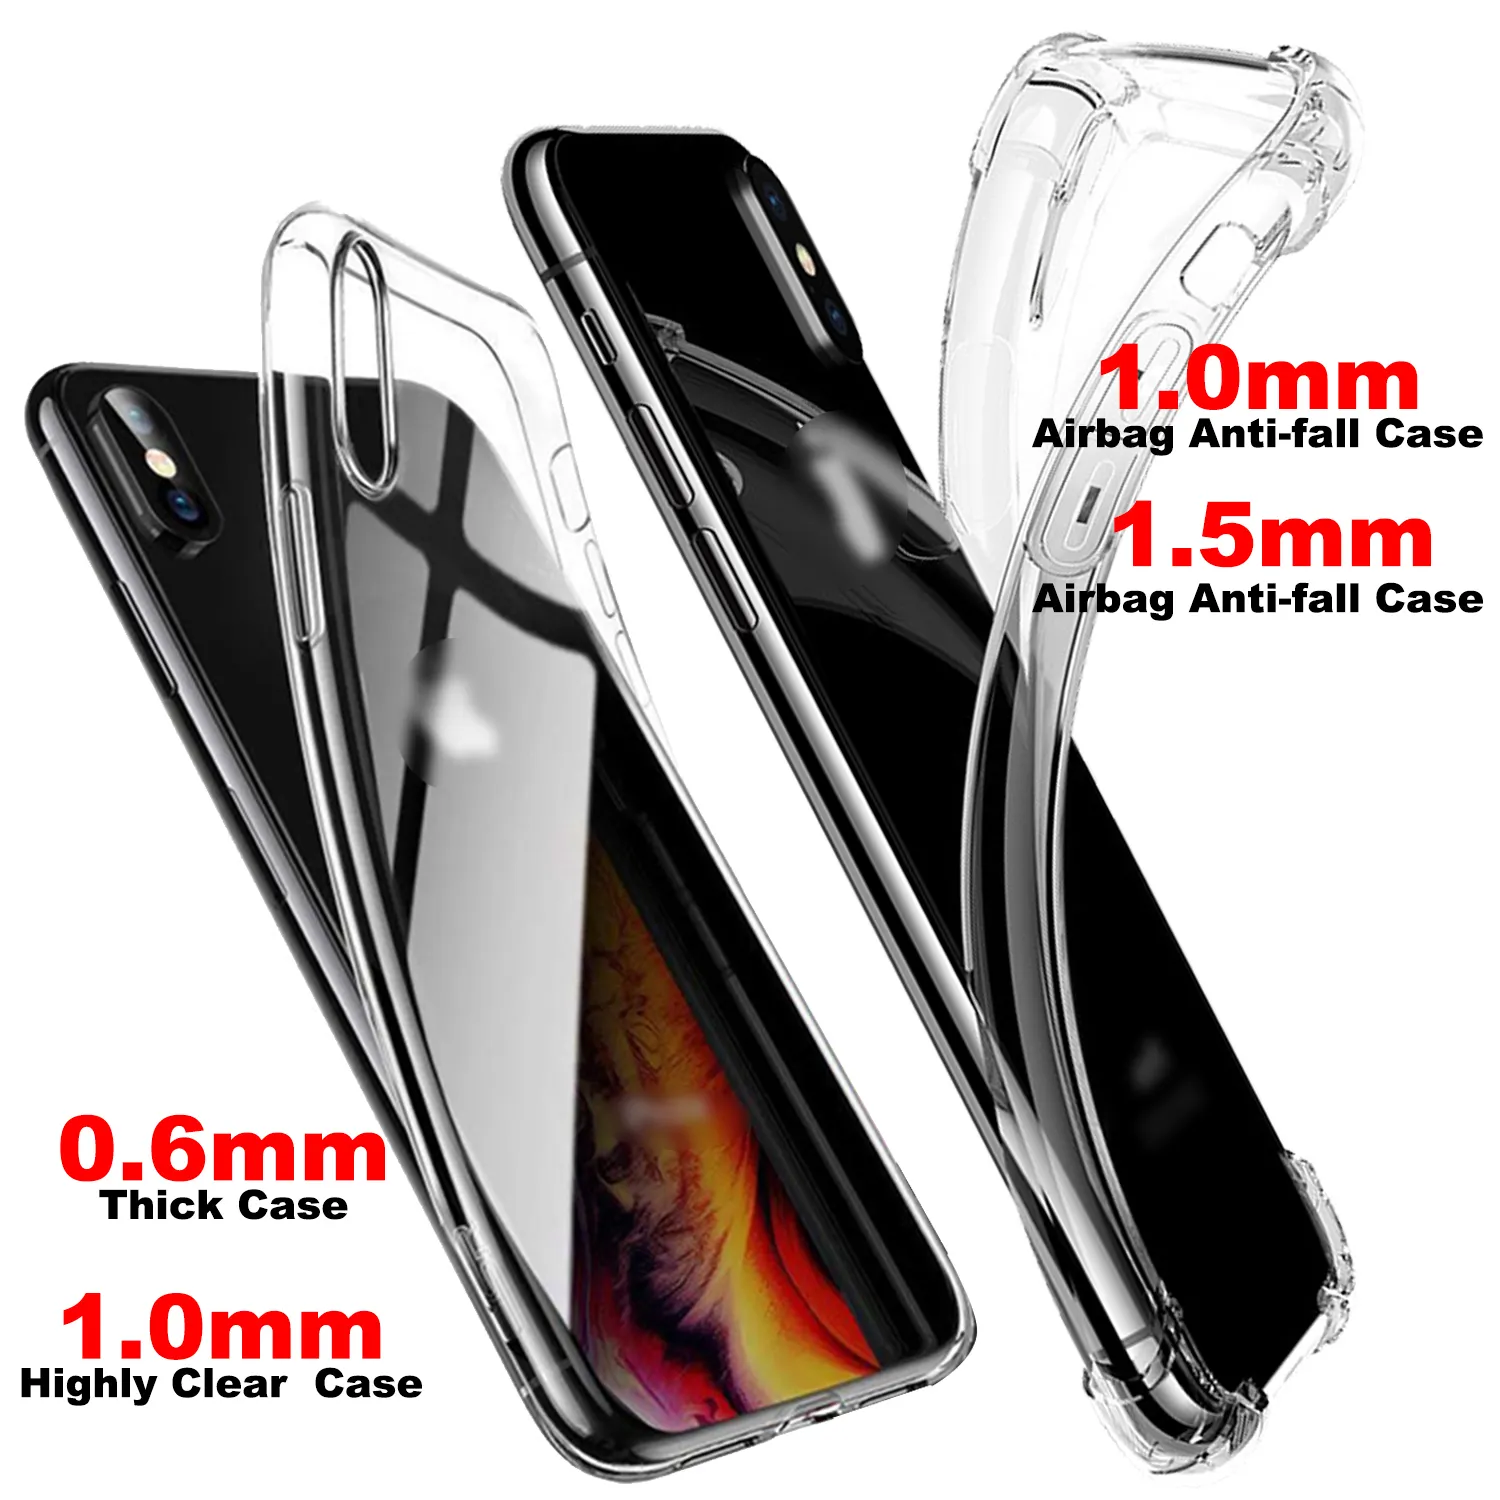 ShanHai Casing Ponsel Bening untuk iPhone 7 XR Casing Pelindung Lunak Silikon untuk iPhone 1211 Pro XS Max X 8 7 6 S Plus 5 5S Casing SE 9 Baru